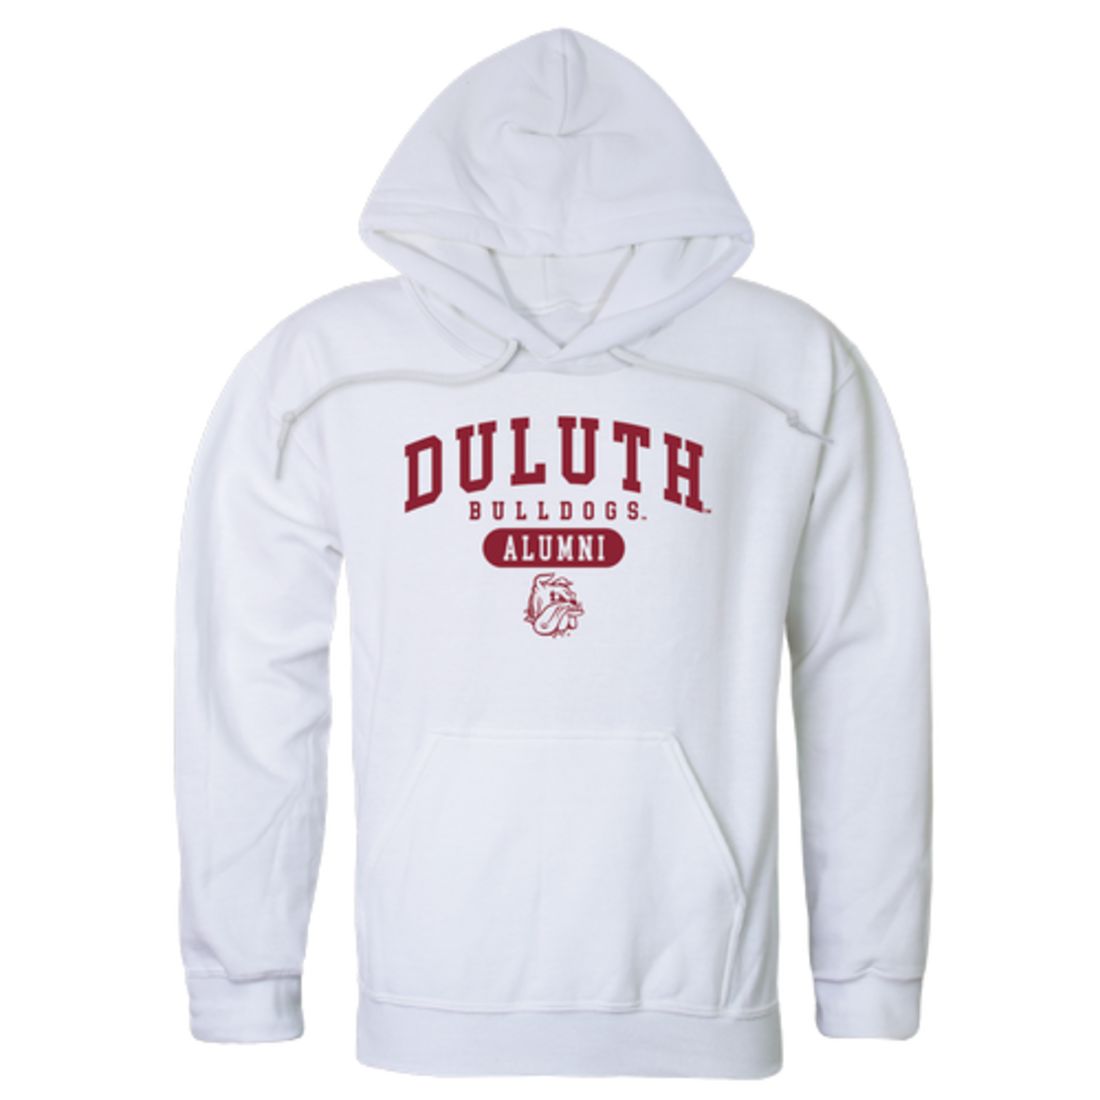 UMD University of Minnesota Duluth Bulldogs Alumni Fleece Hoodie Sweatshirts Heather Charcoal-Campus-Wardrobe